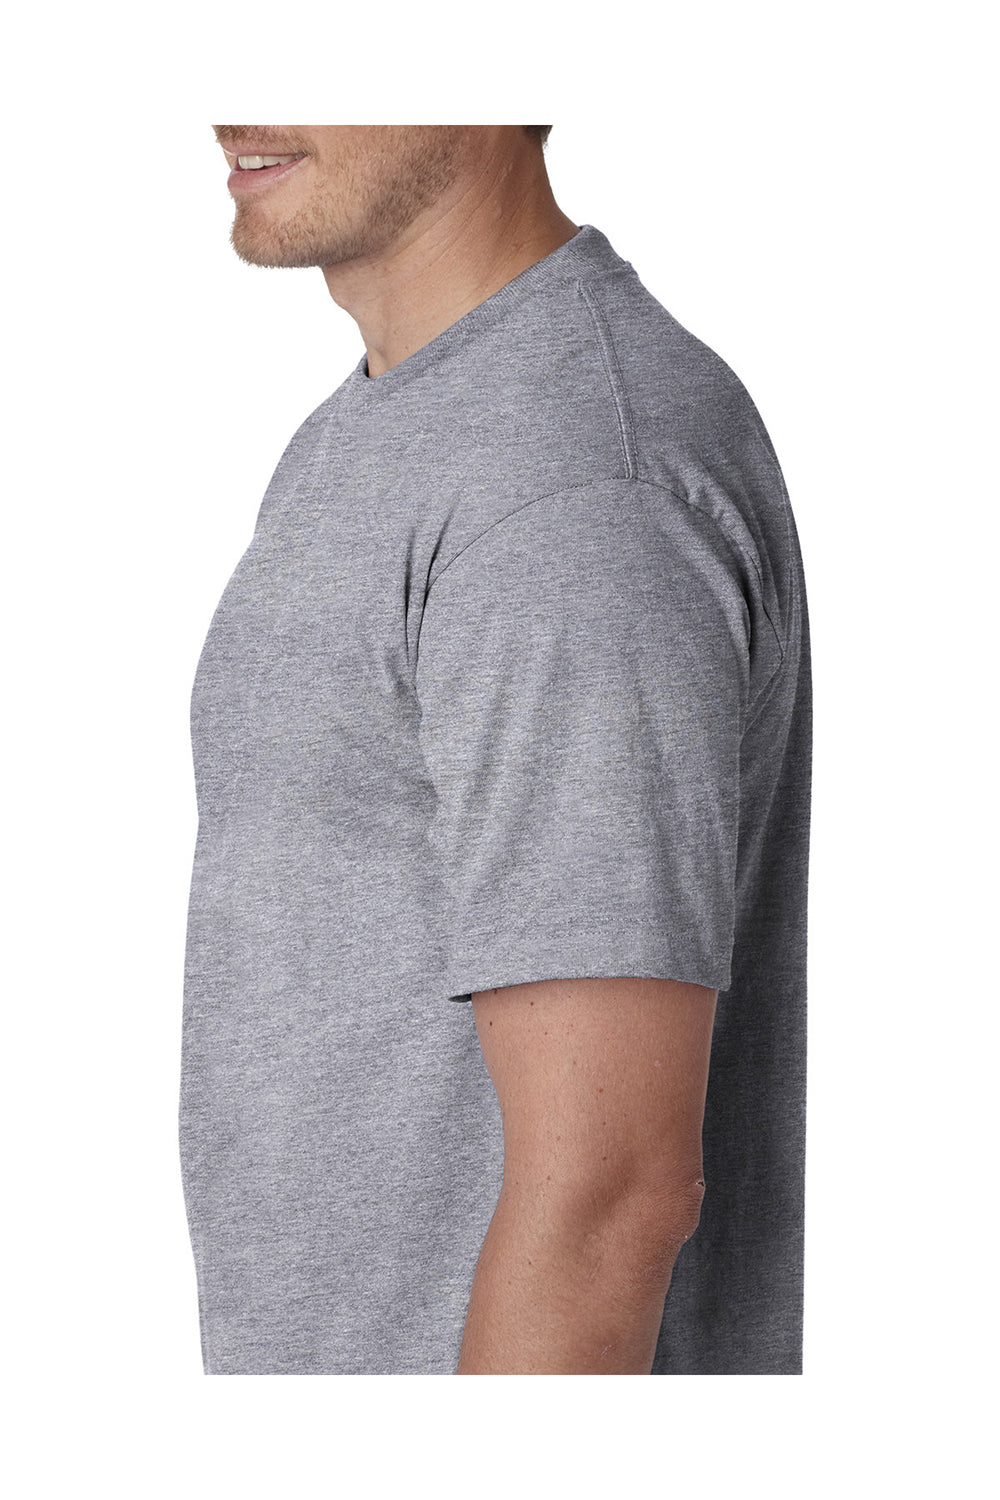 Bayside BA5100 Mens USA Made Short Sleeve Crewneck T-Shirt Dark Ash Grey Model Side